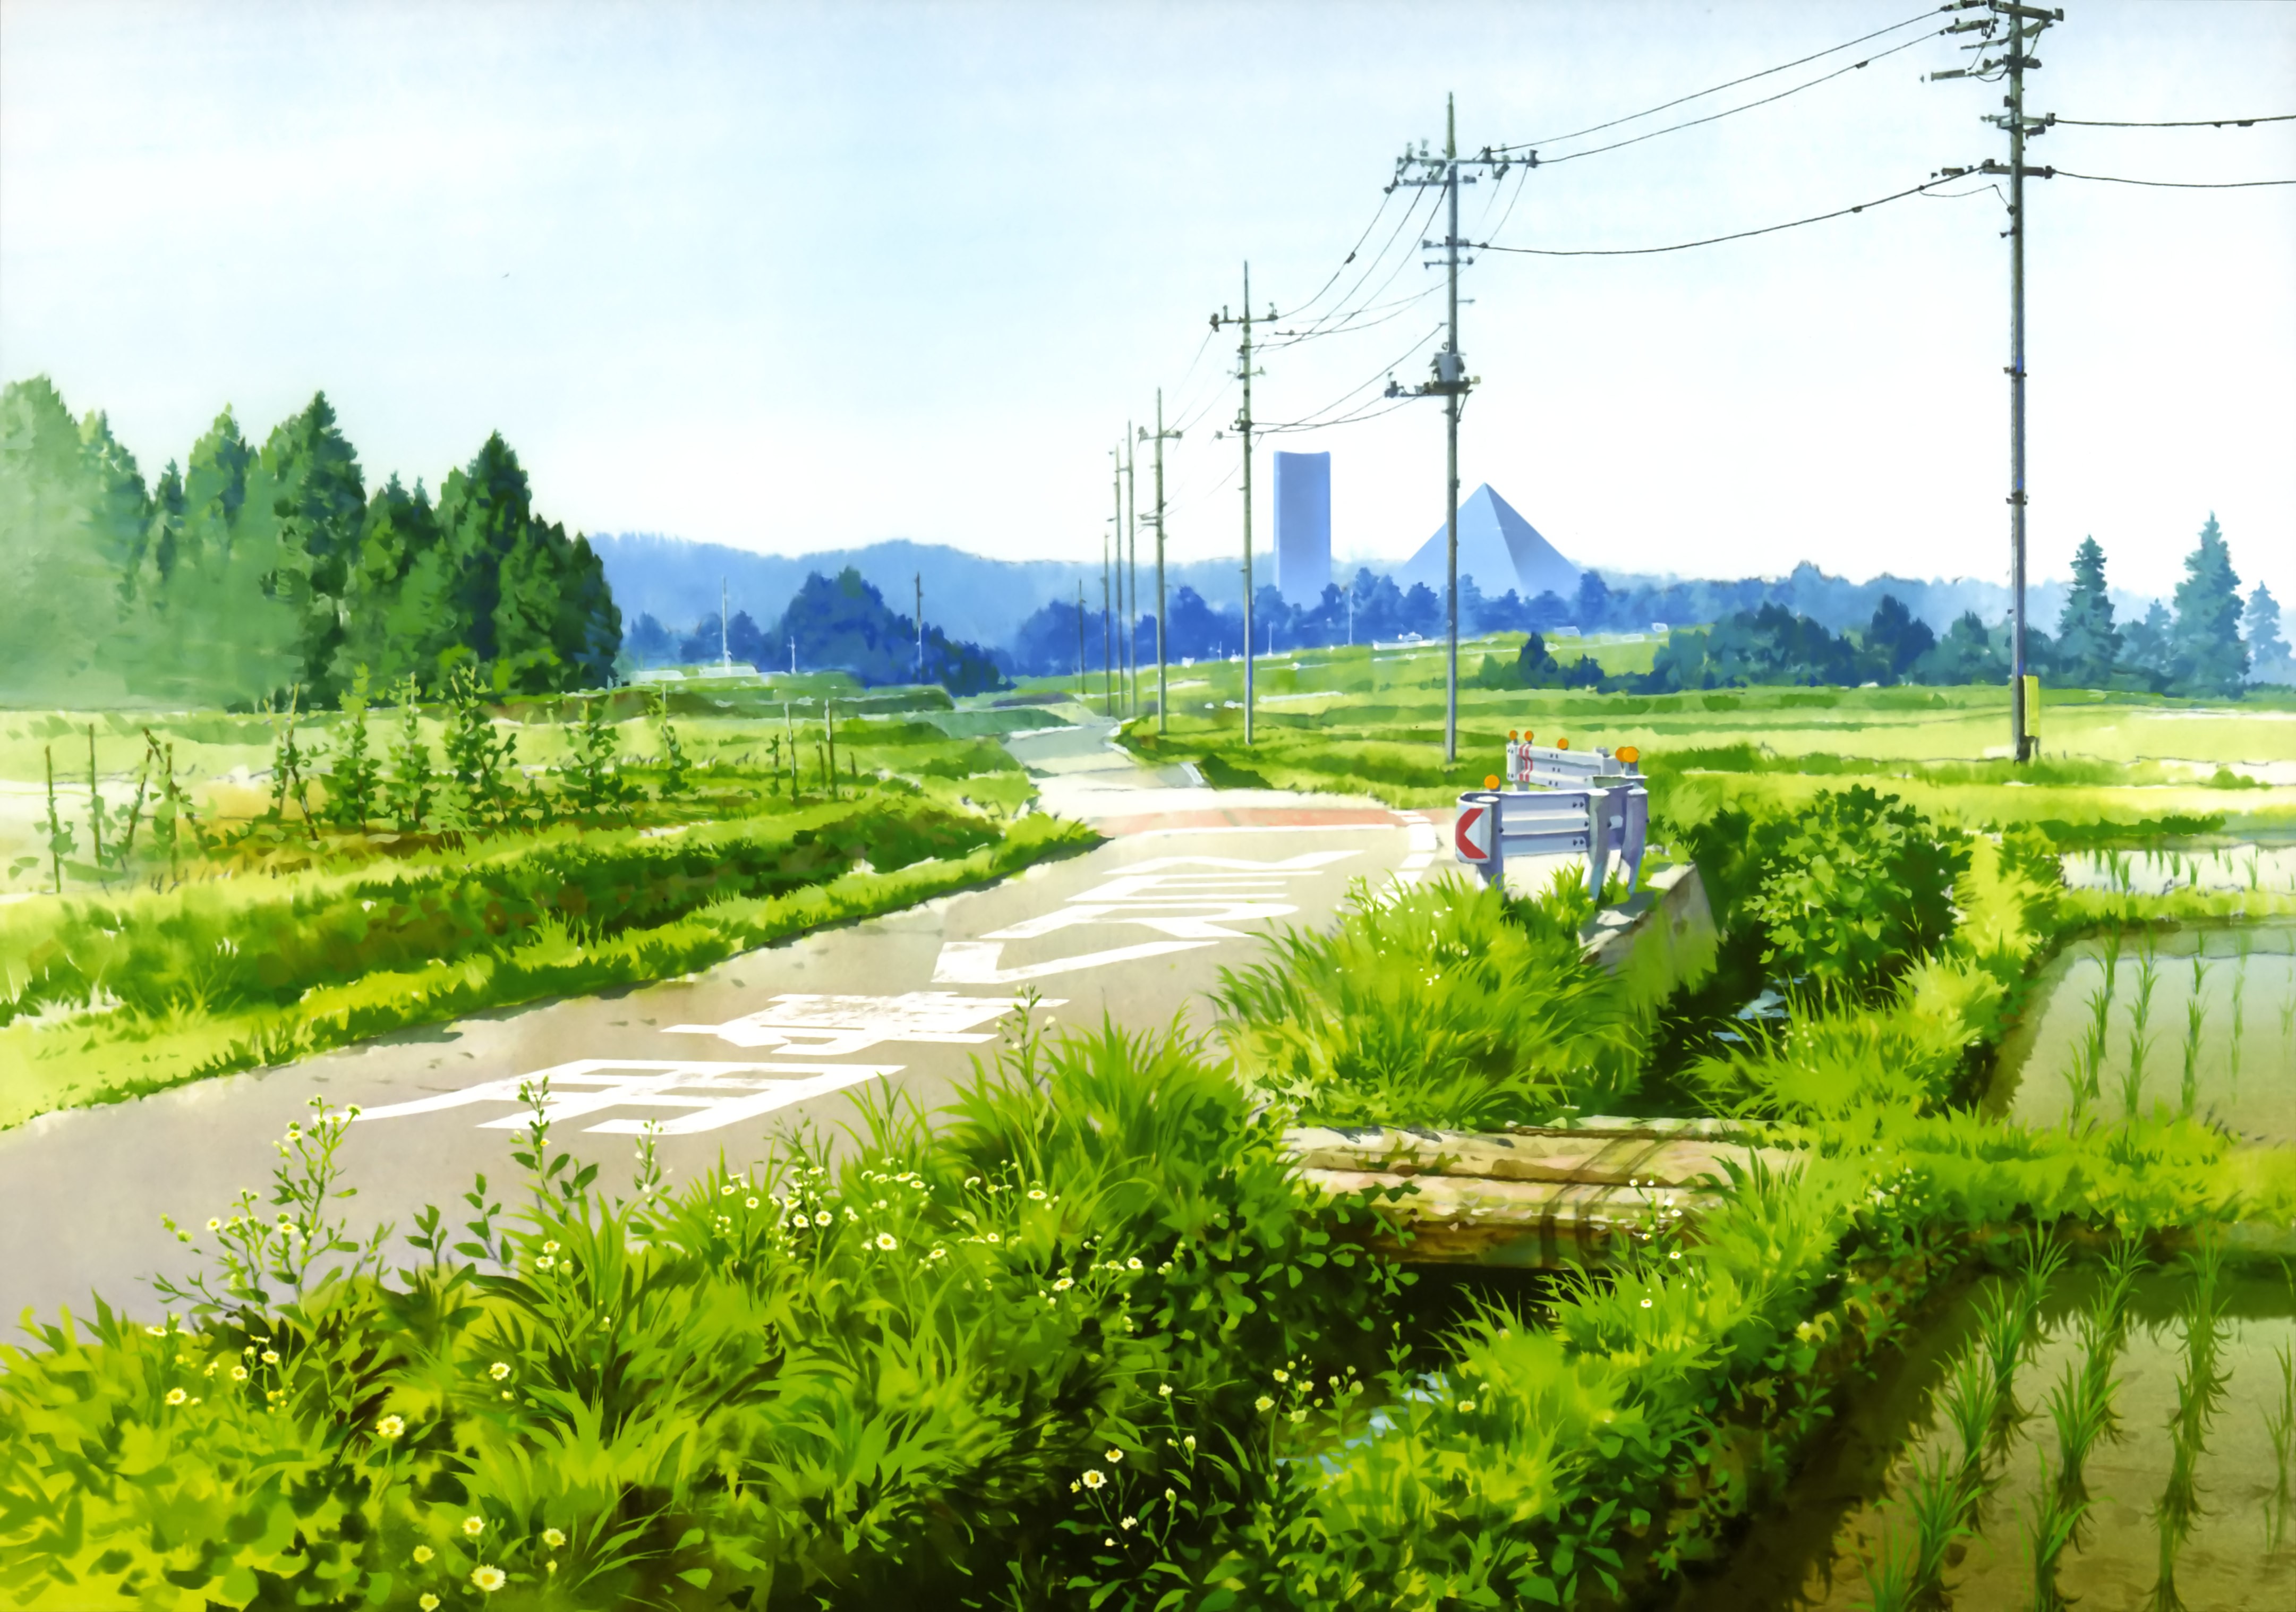 #anime, #clouds, #landscape, #grass, #road wallpaper Gallery HD Wallpaper